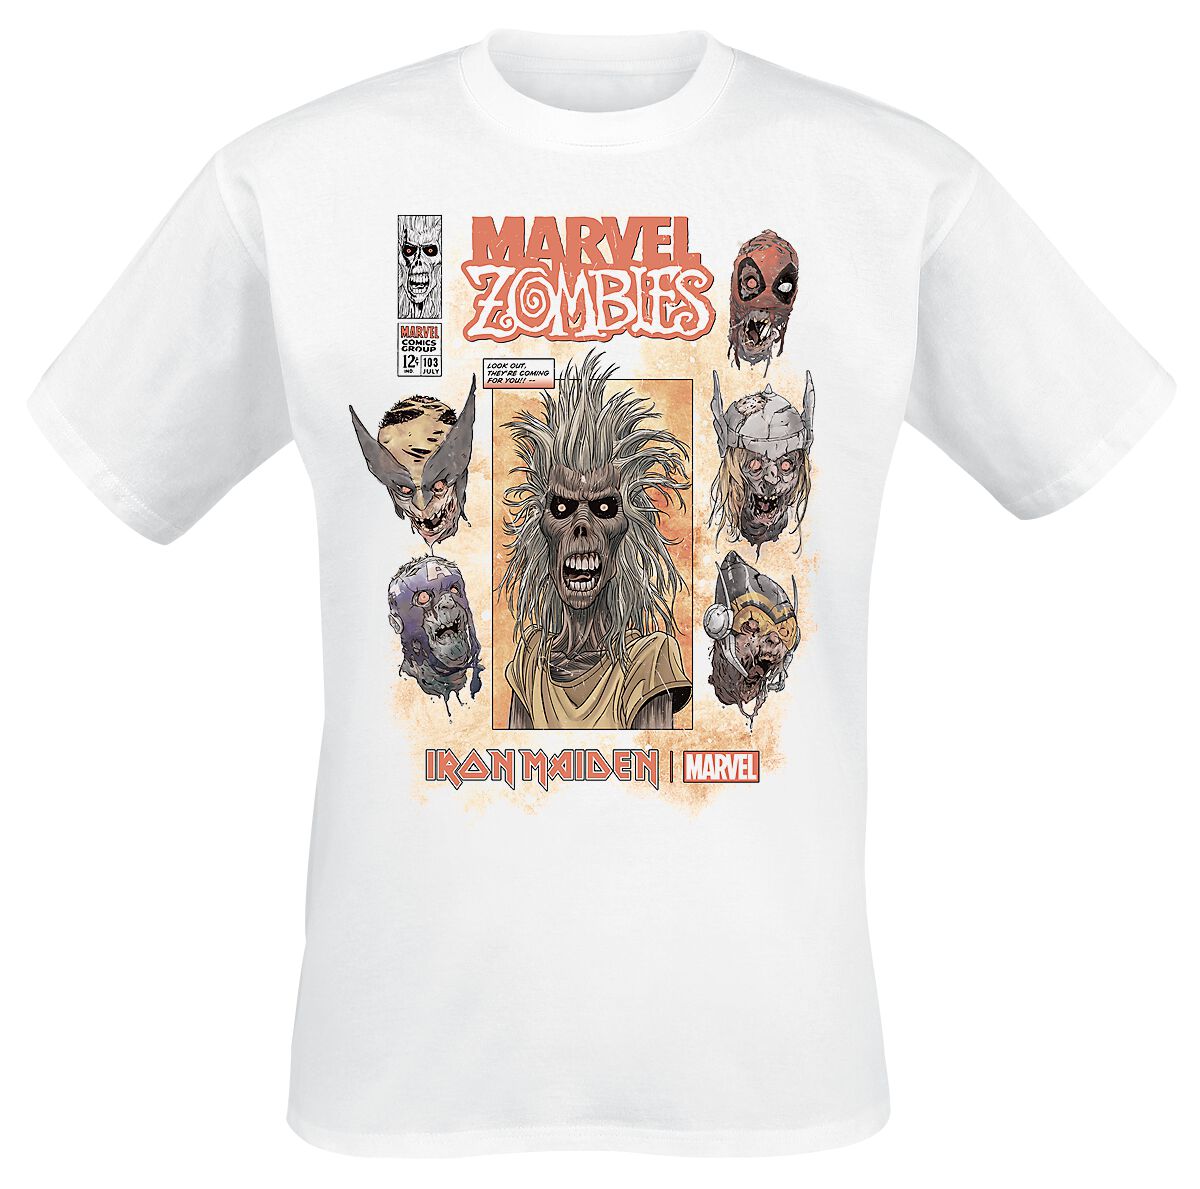 T-Shirt Manches courtes de Iron Maiden - Iron Maiden x Marvel Collection - Zombie Eddie Comic - S à 